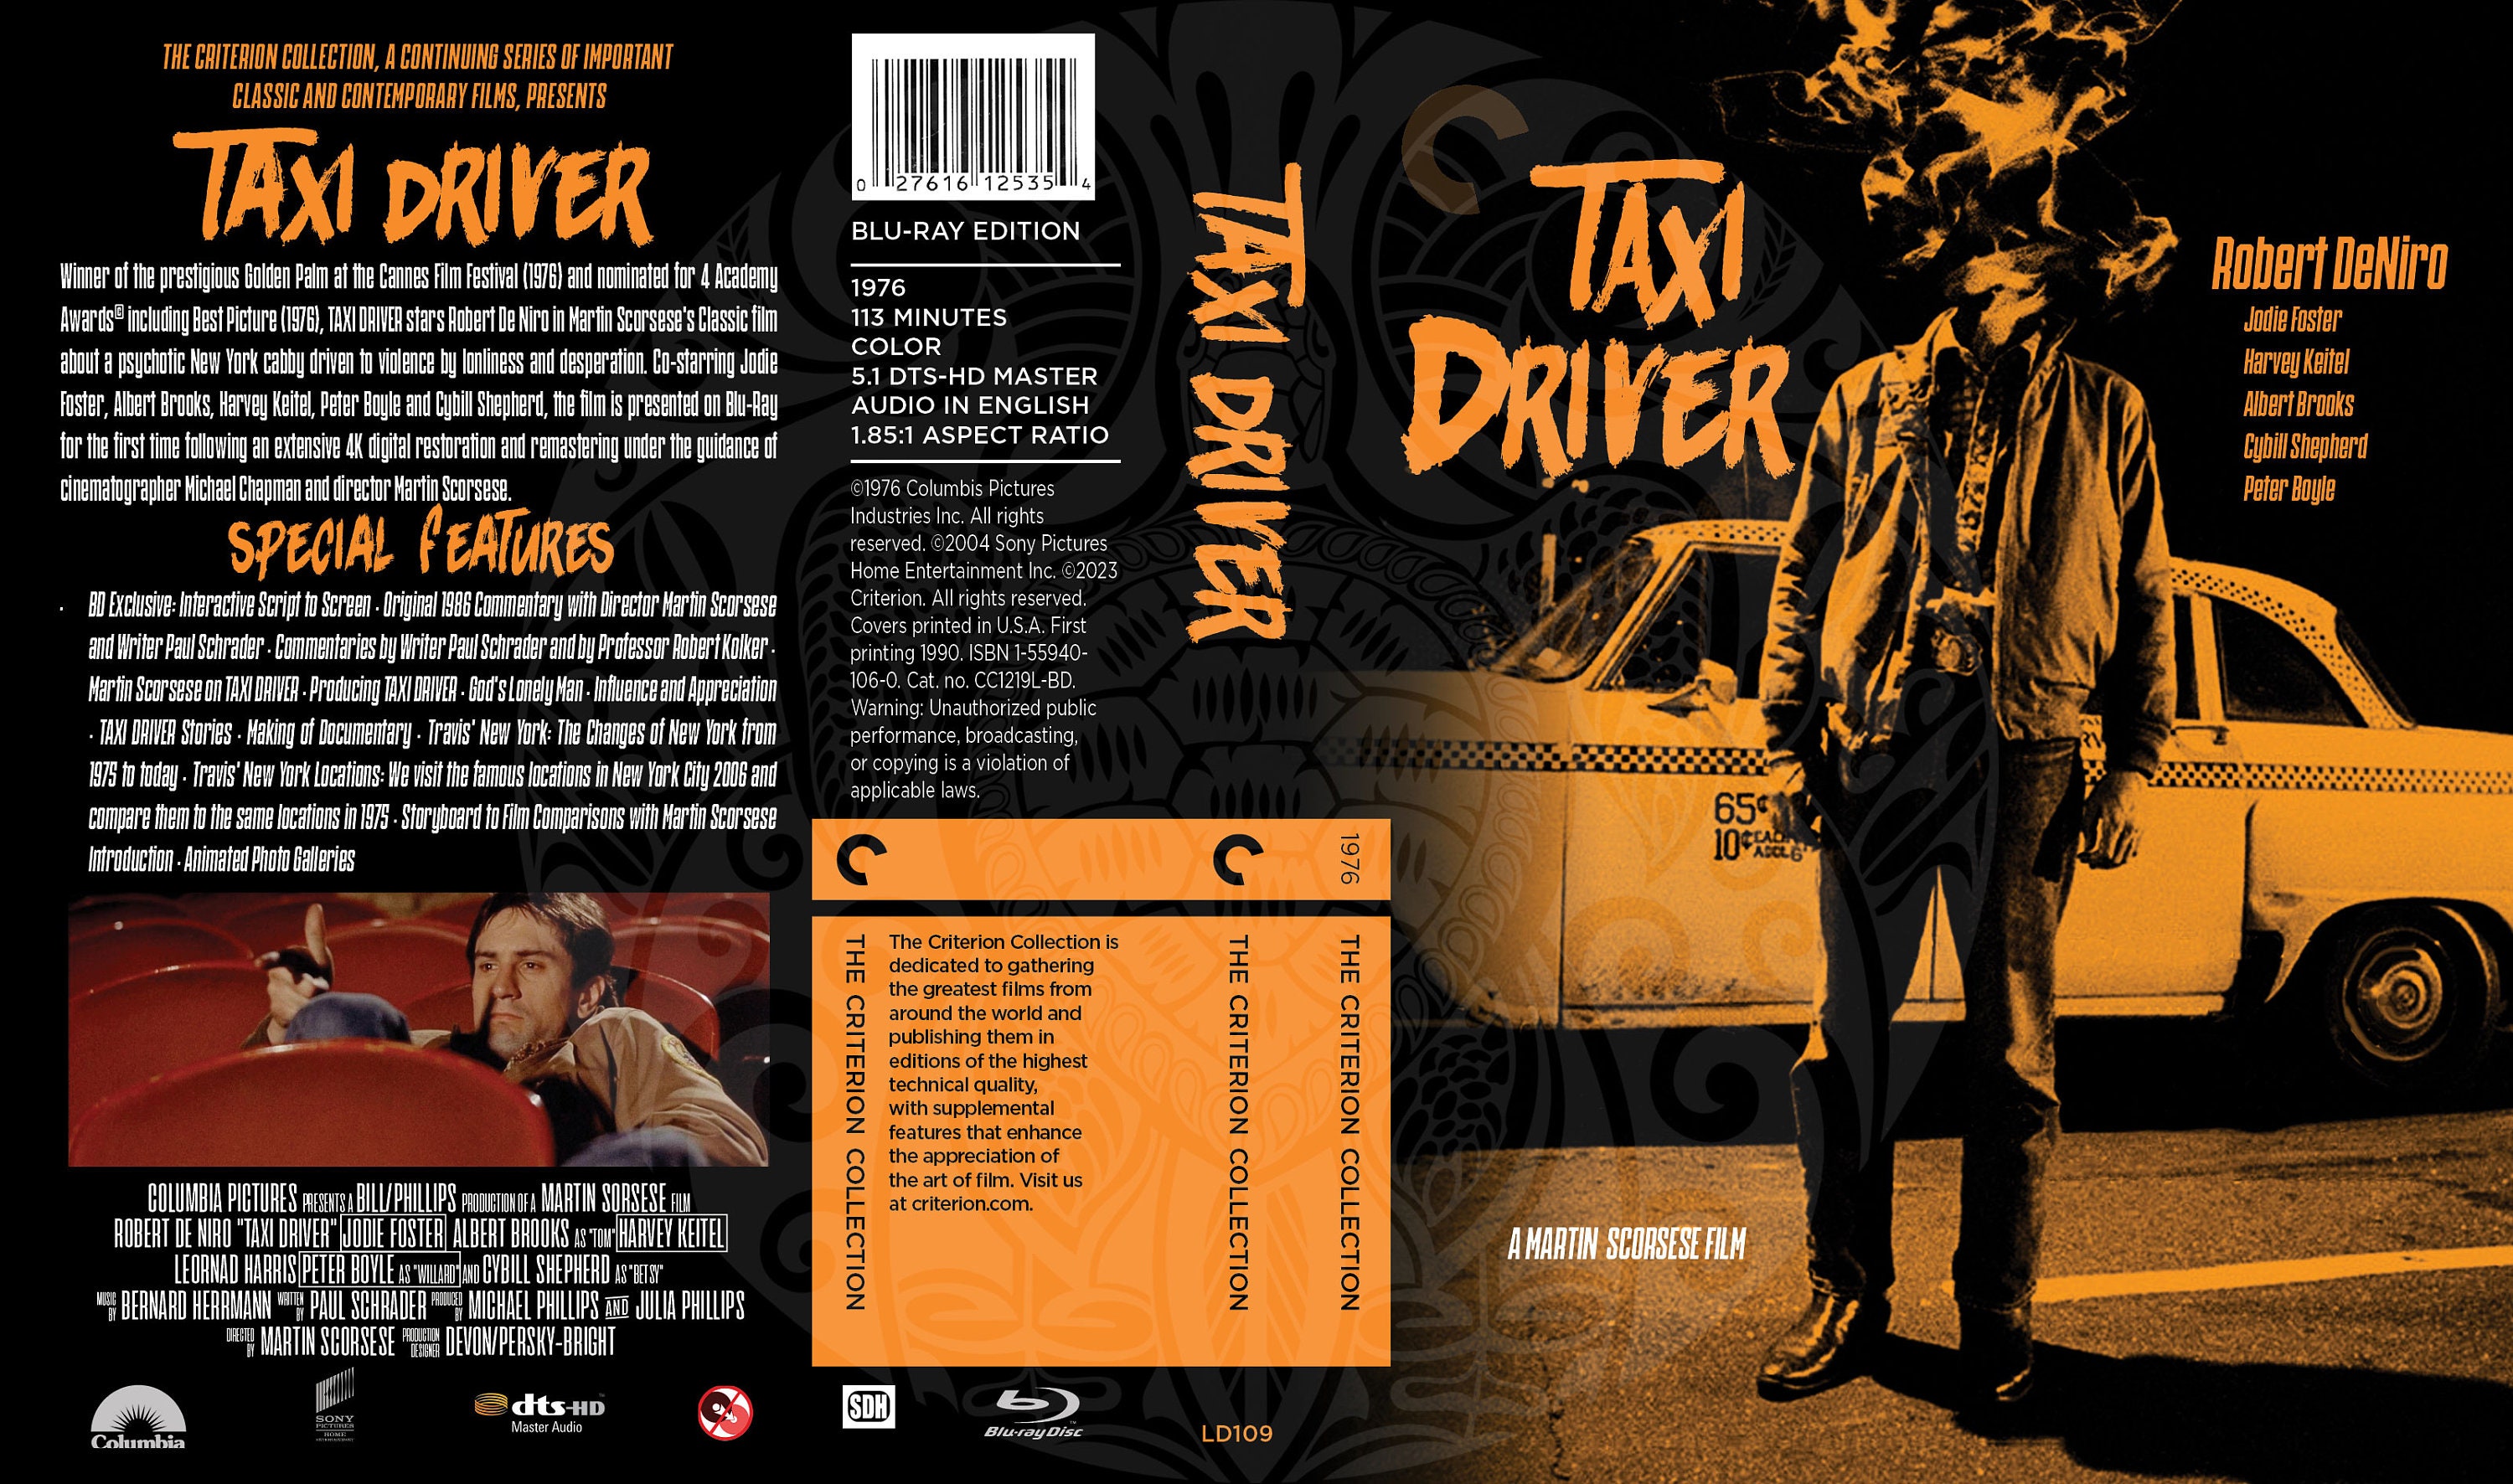 Taxi Driver (40th Anniversary Edition)